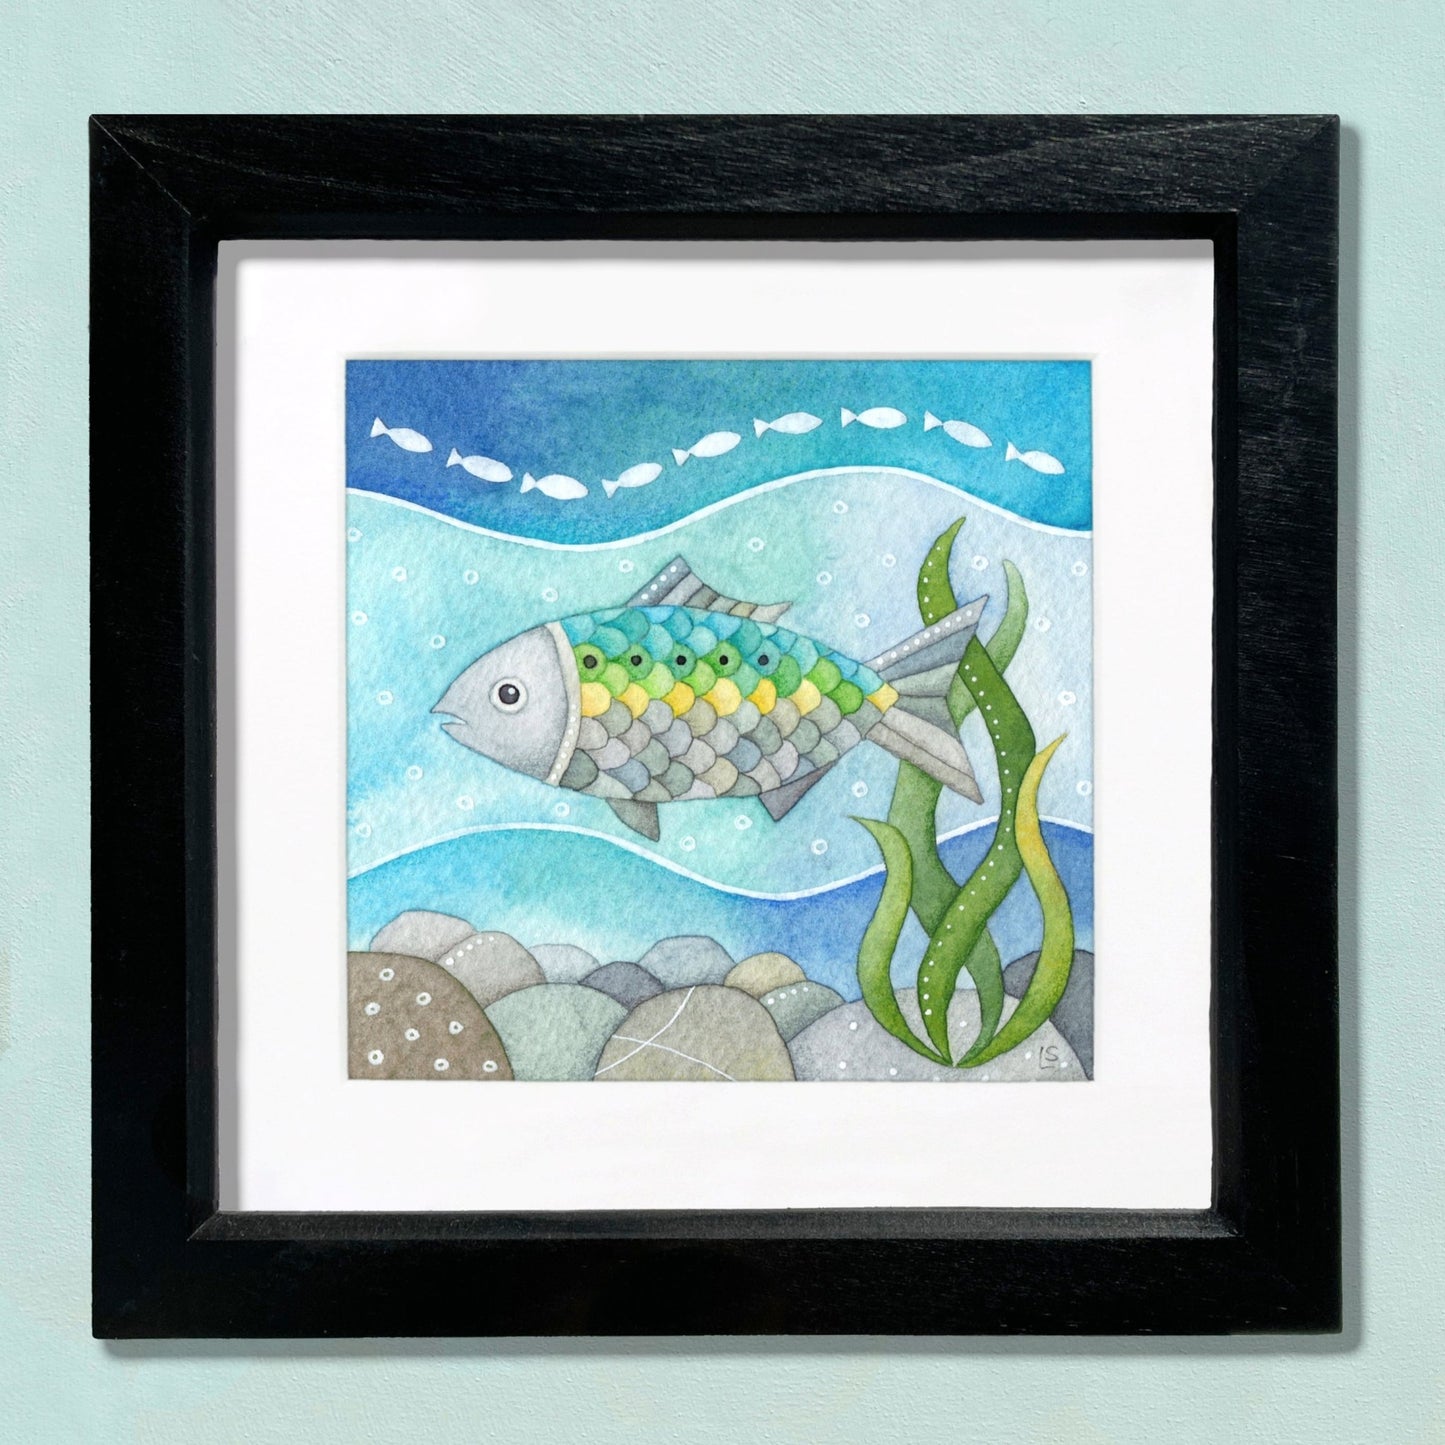 Underwater Fish Print - Seaside Watercolour Painting - Twait Shad Signed Art - East Neuk Beach Crafts